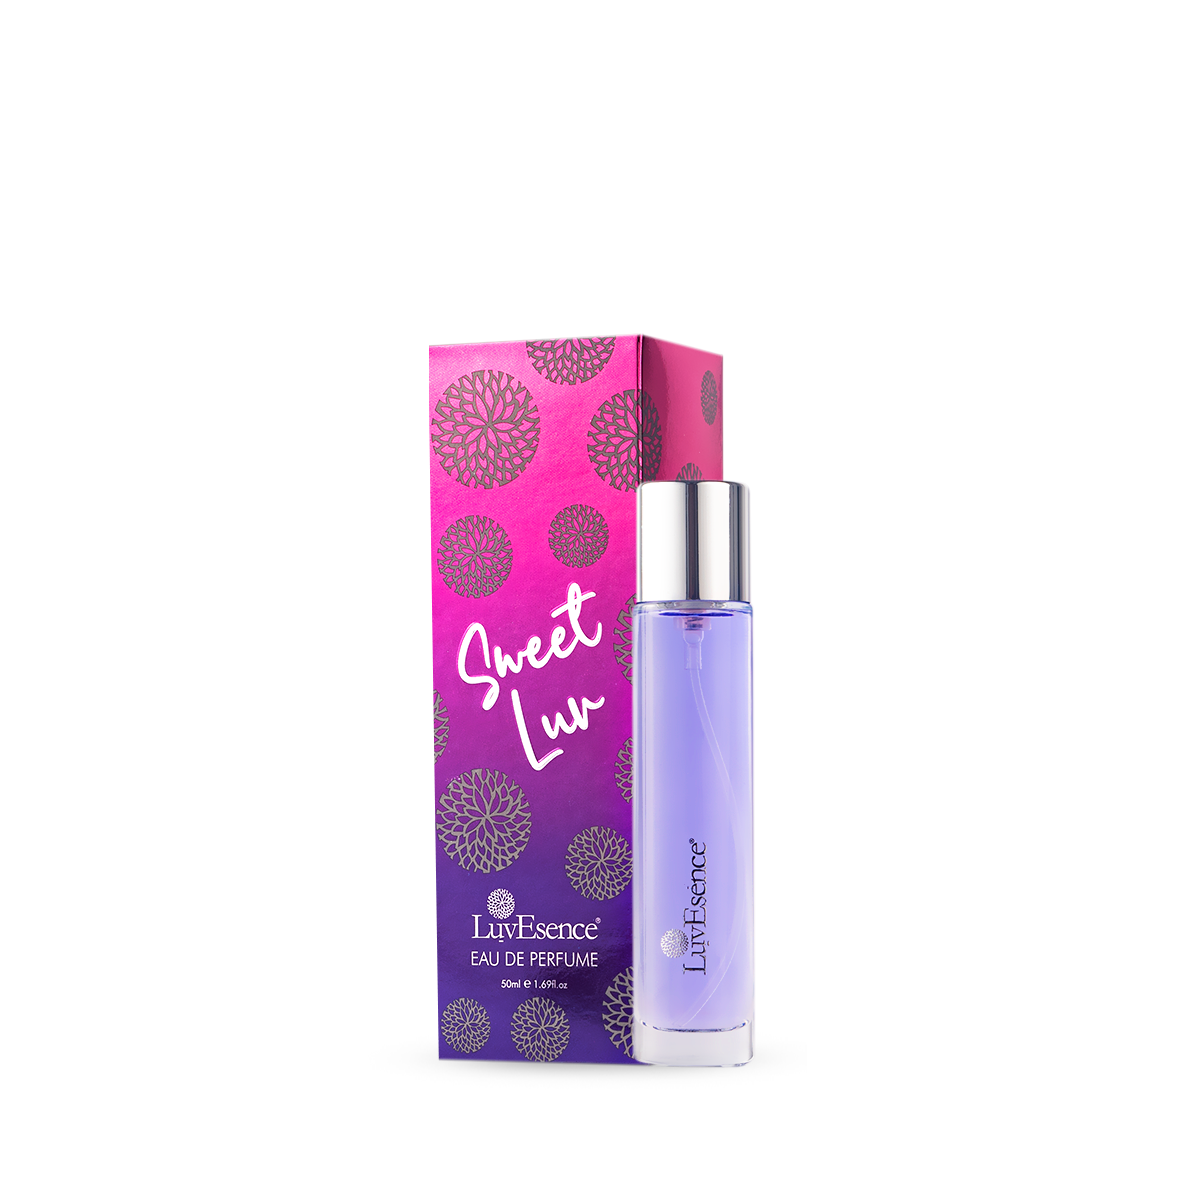 yolai audis sweet miss perfume rose light fragrance female fresh perfume  lasting fragrance (the product image has been logo removed)